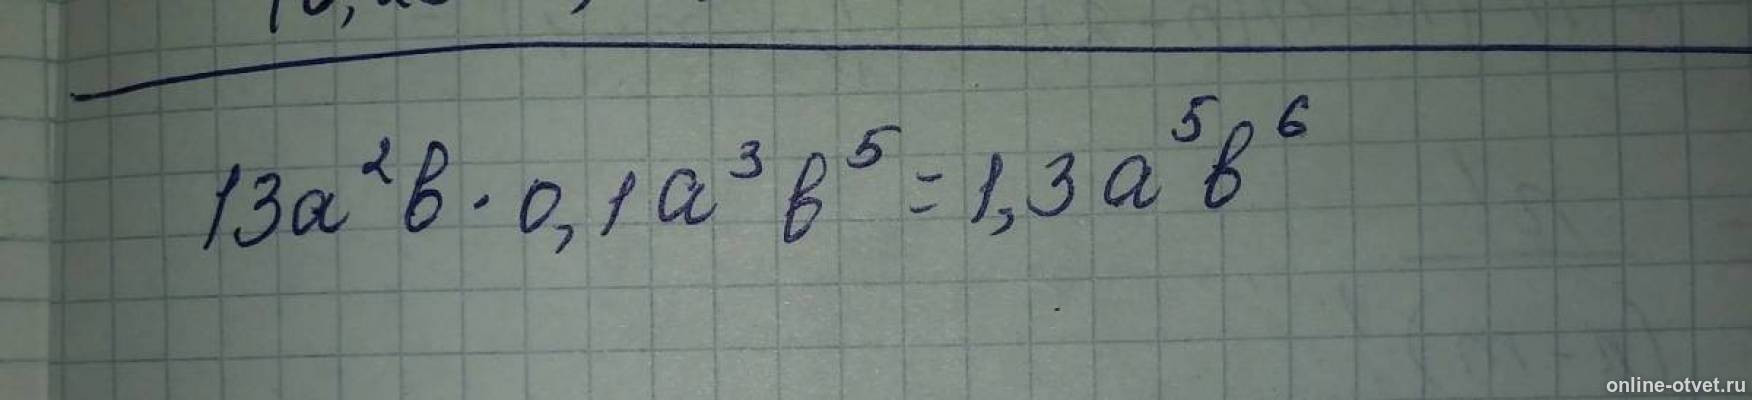 Перемножить 1 б. Перемножь: (1+b)(−2+a).. Перемножьте Одночлены 13а2b и 0.1a3b5. 5b-3a-2b-5a. 1.13.